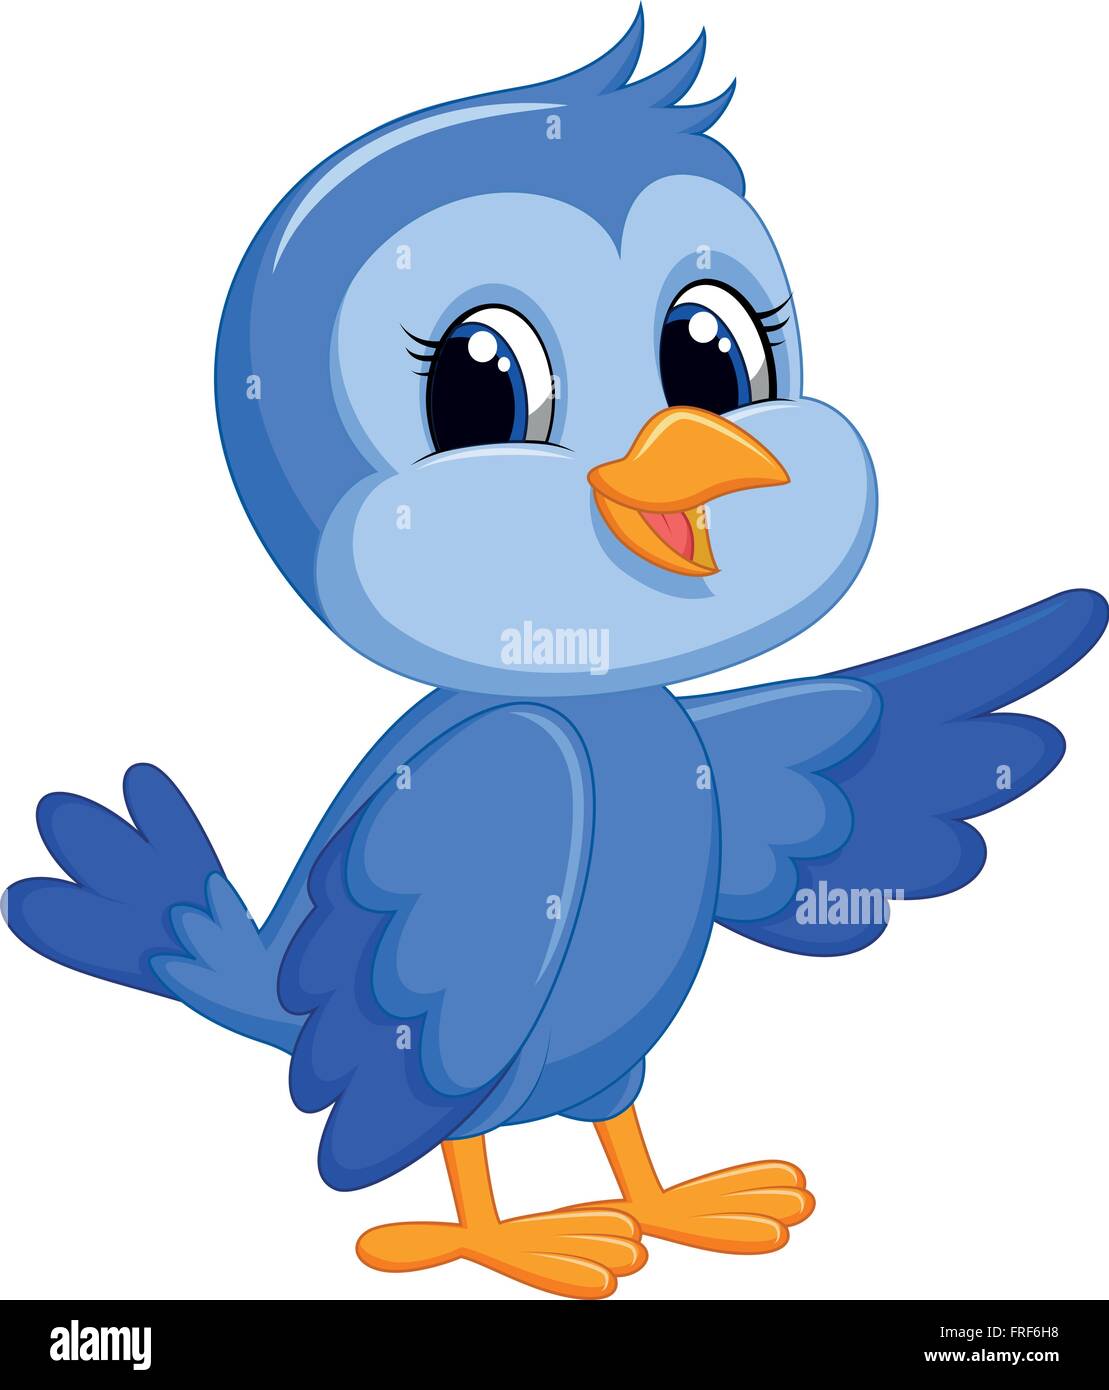 Cute cartoon blue bird Image Vectorielle Stock - Alamy